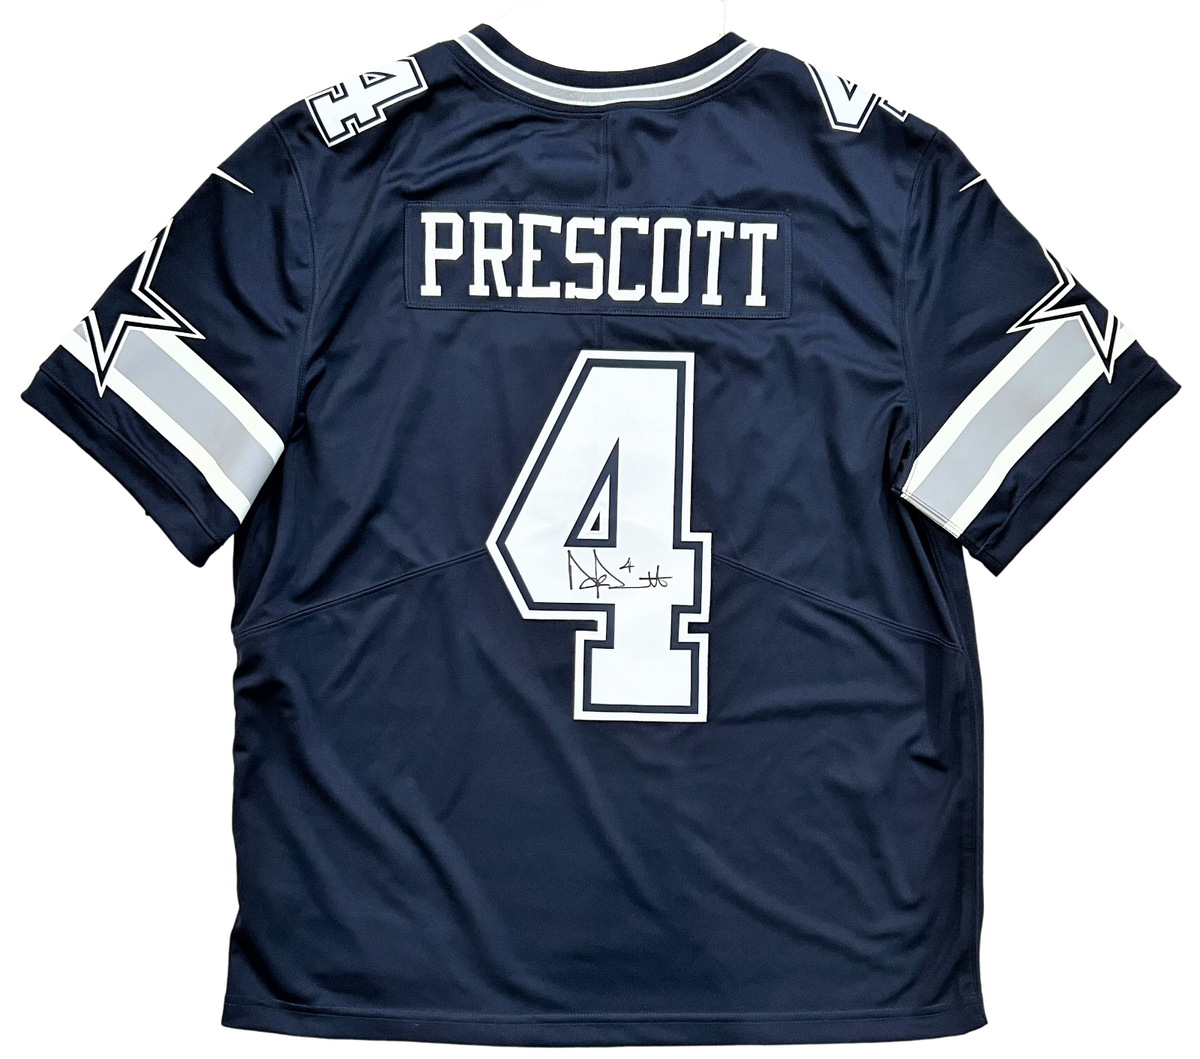 prescott 4 jersey